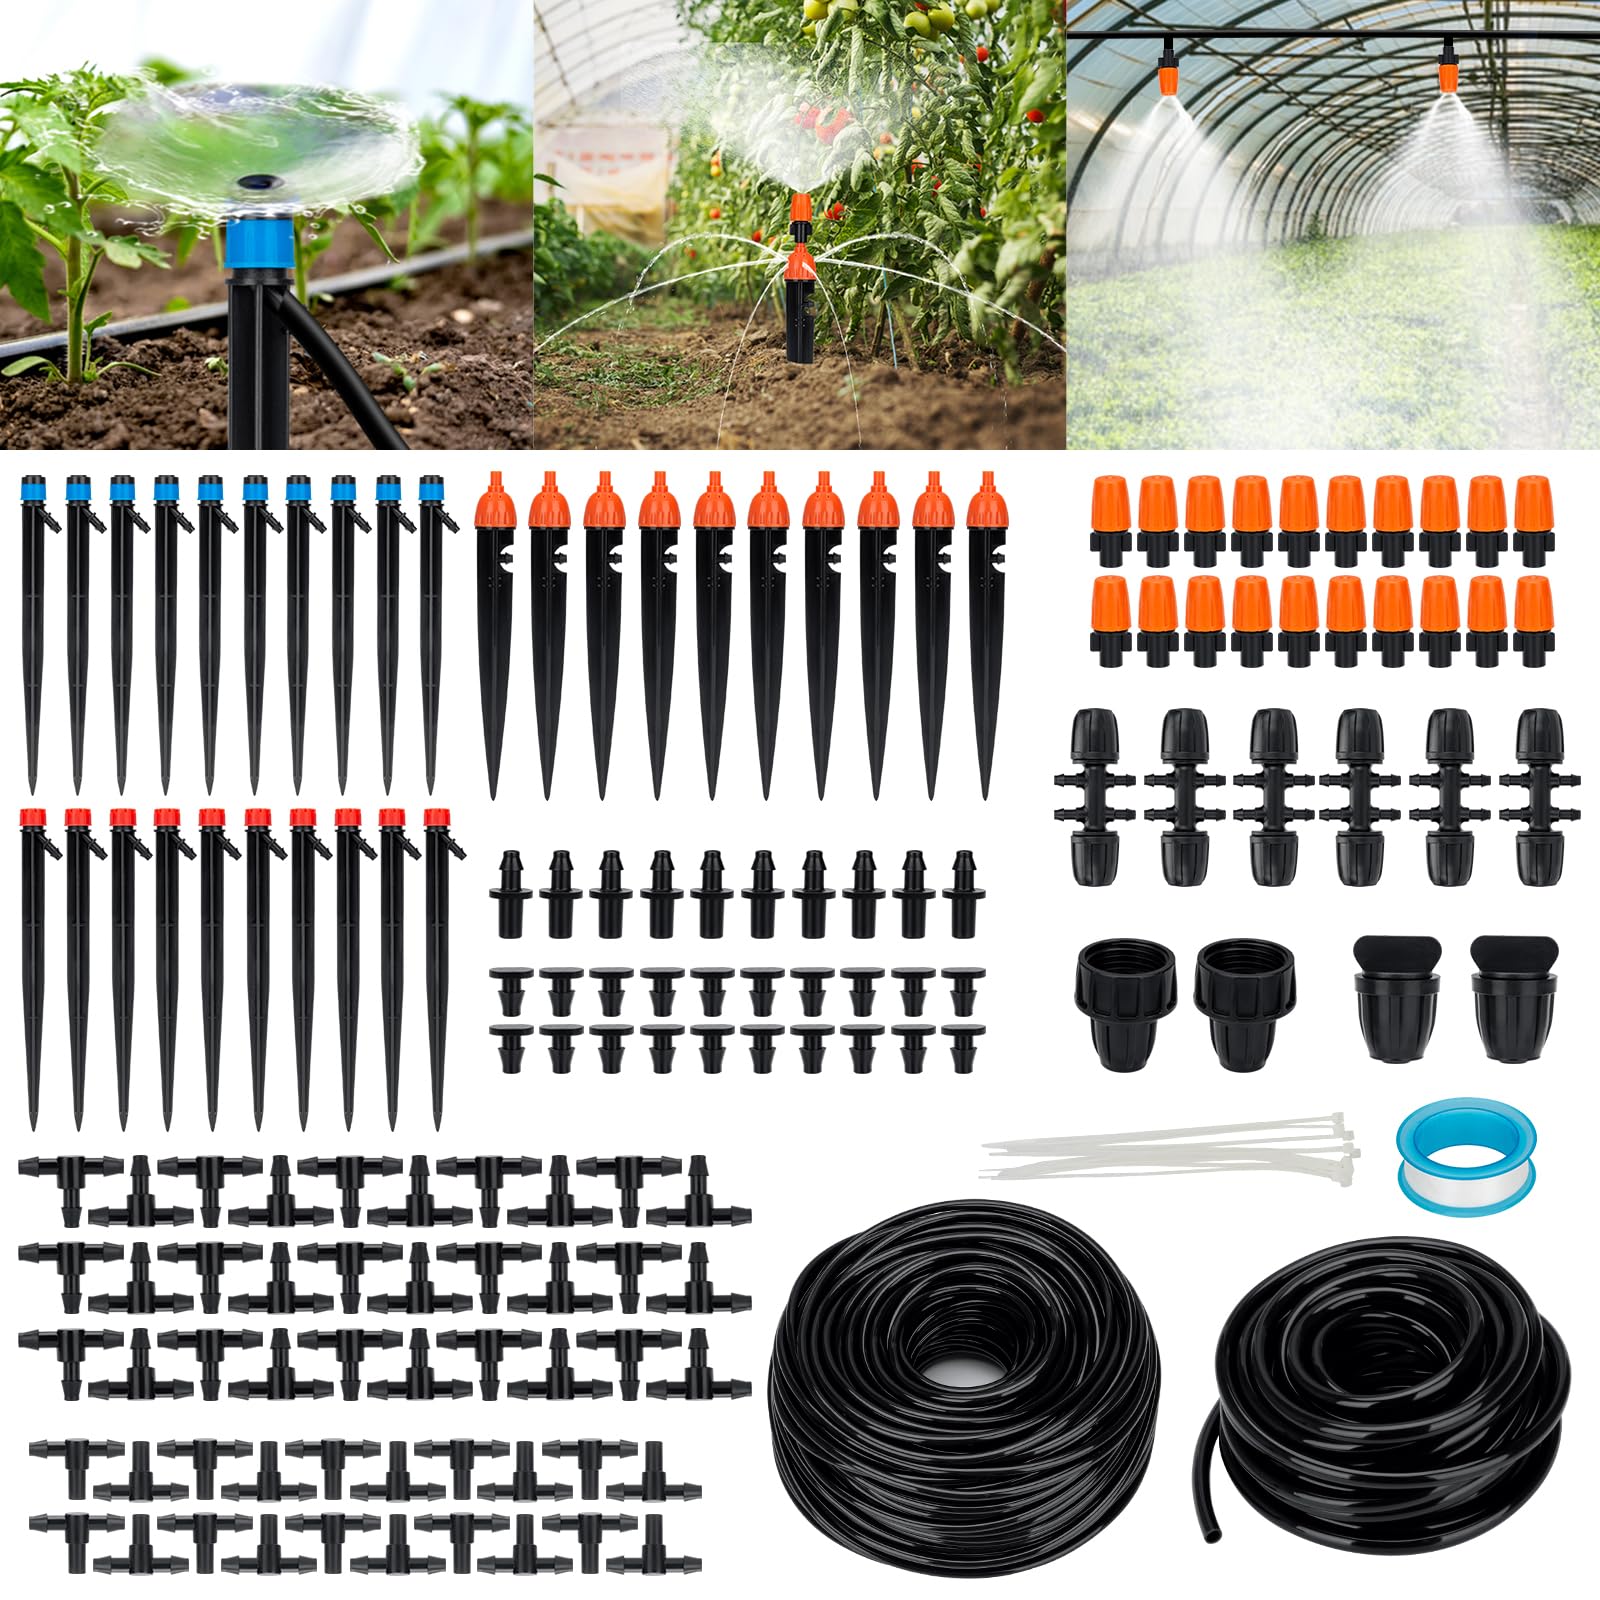 240FT Drip Irrigation System Kit